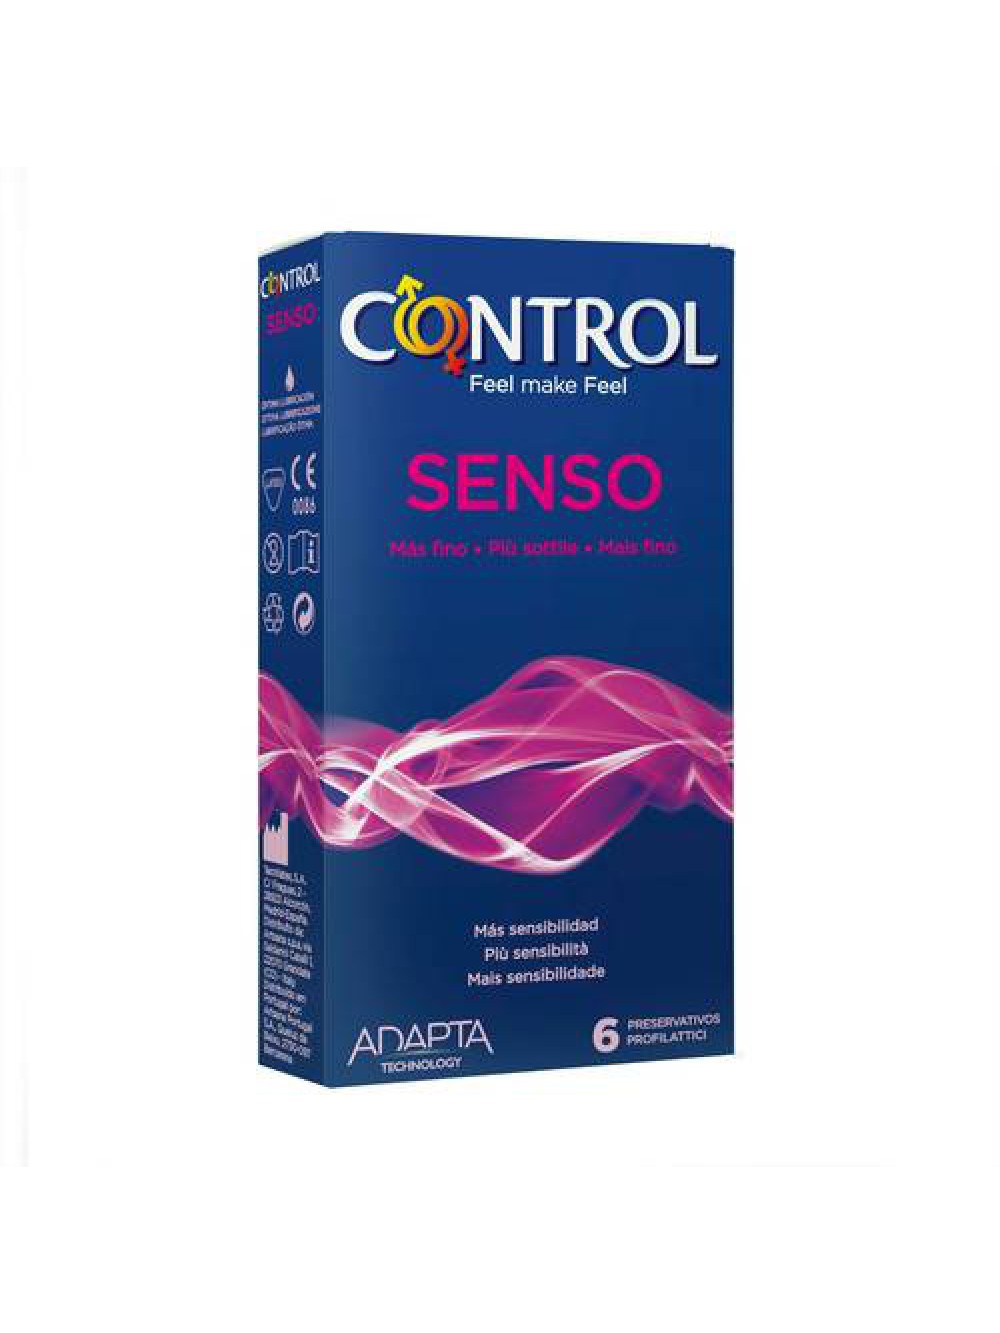 Control Senso 8411134119681